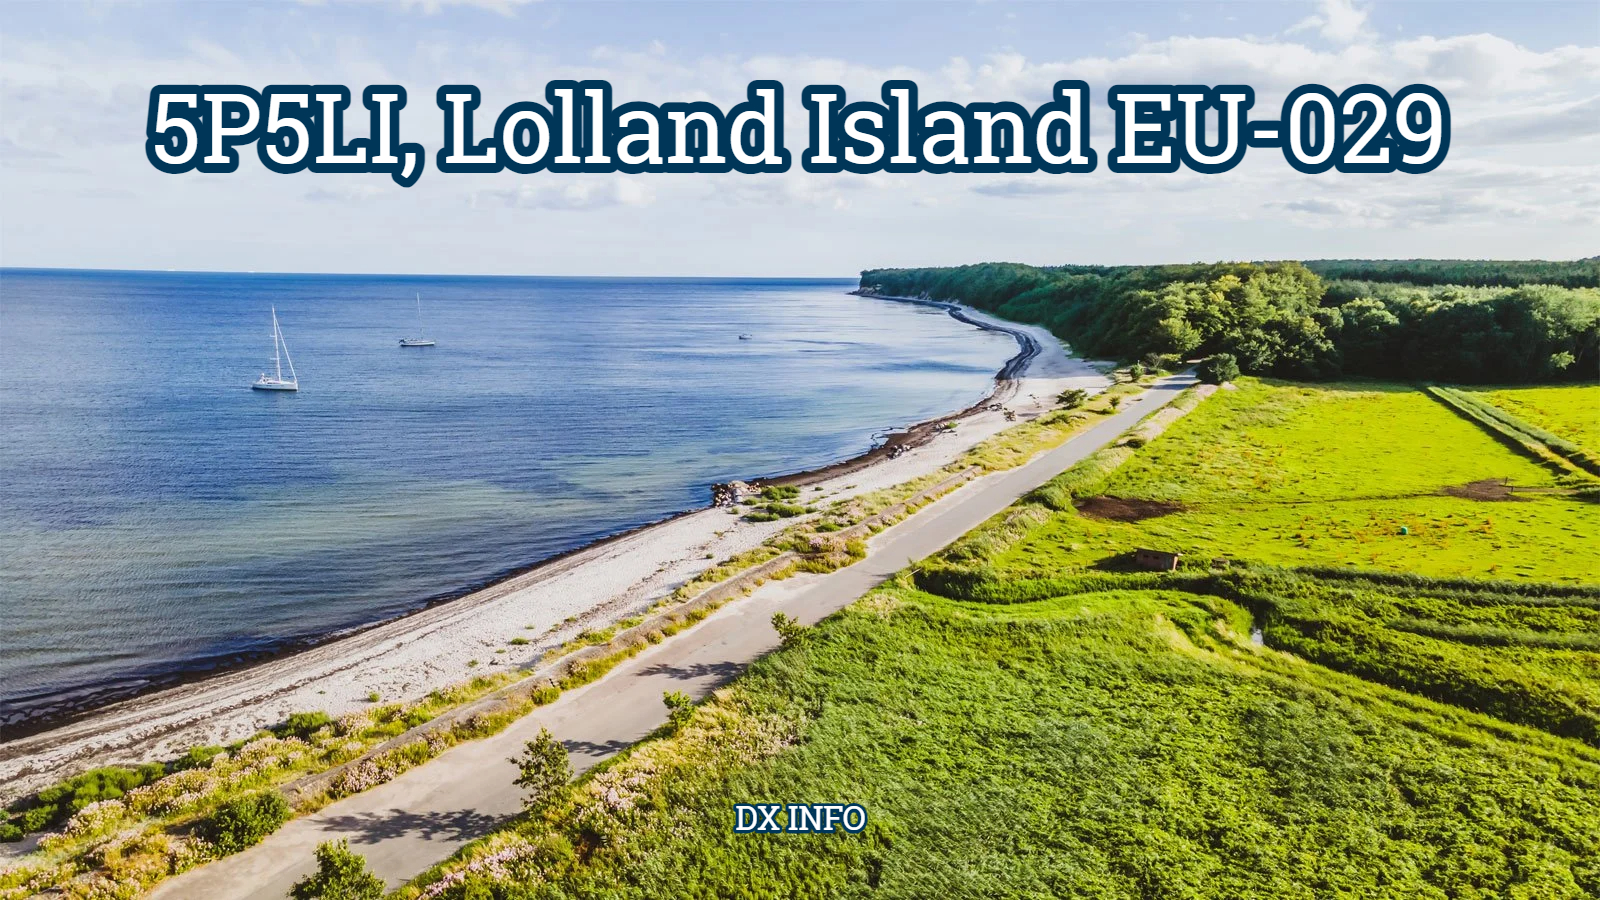 Lolland Island, EU-029